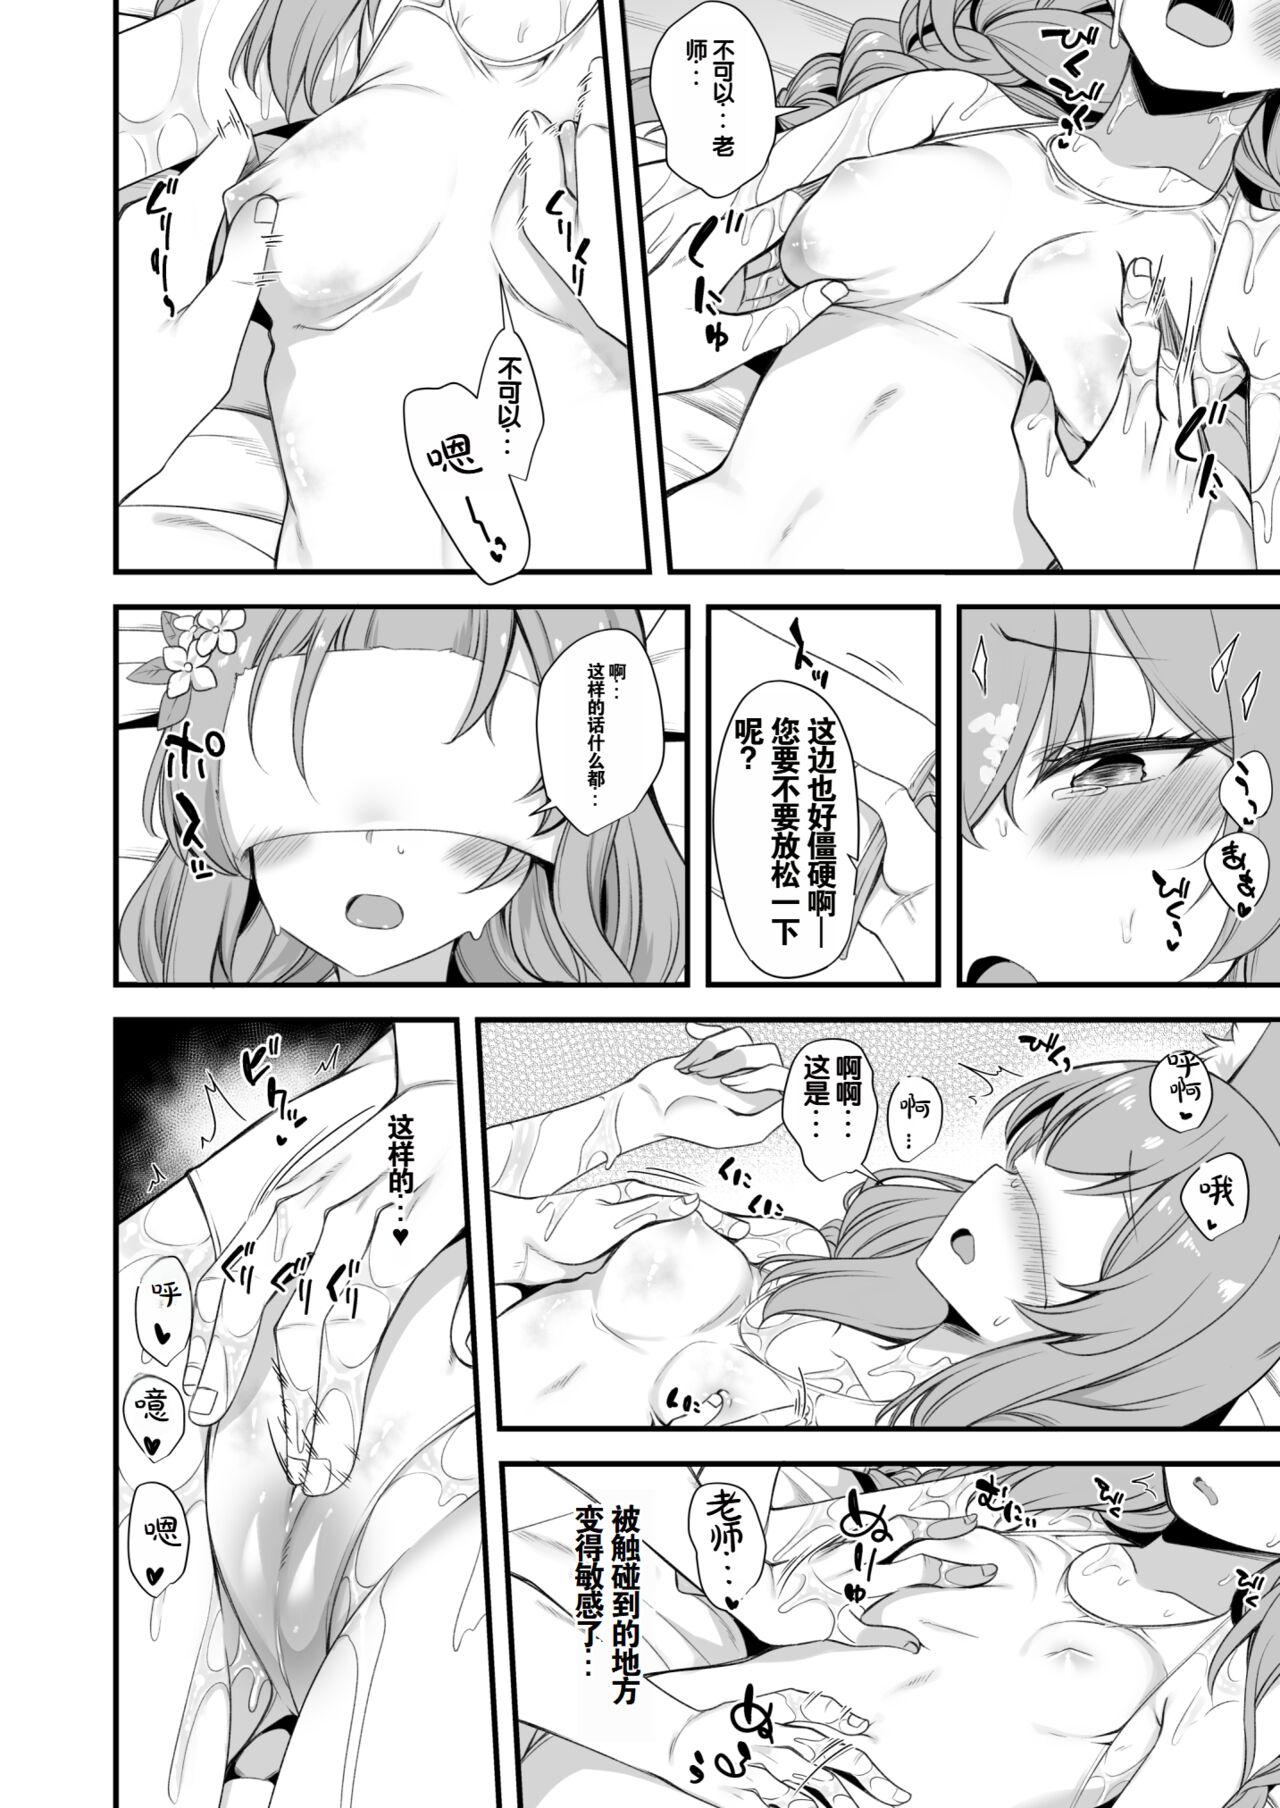 Gay Solo Mari Oil Massage Ecchi Manga - Blue archive Gostosa - Page 4